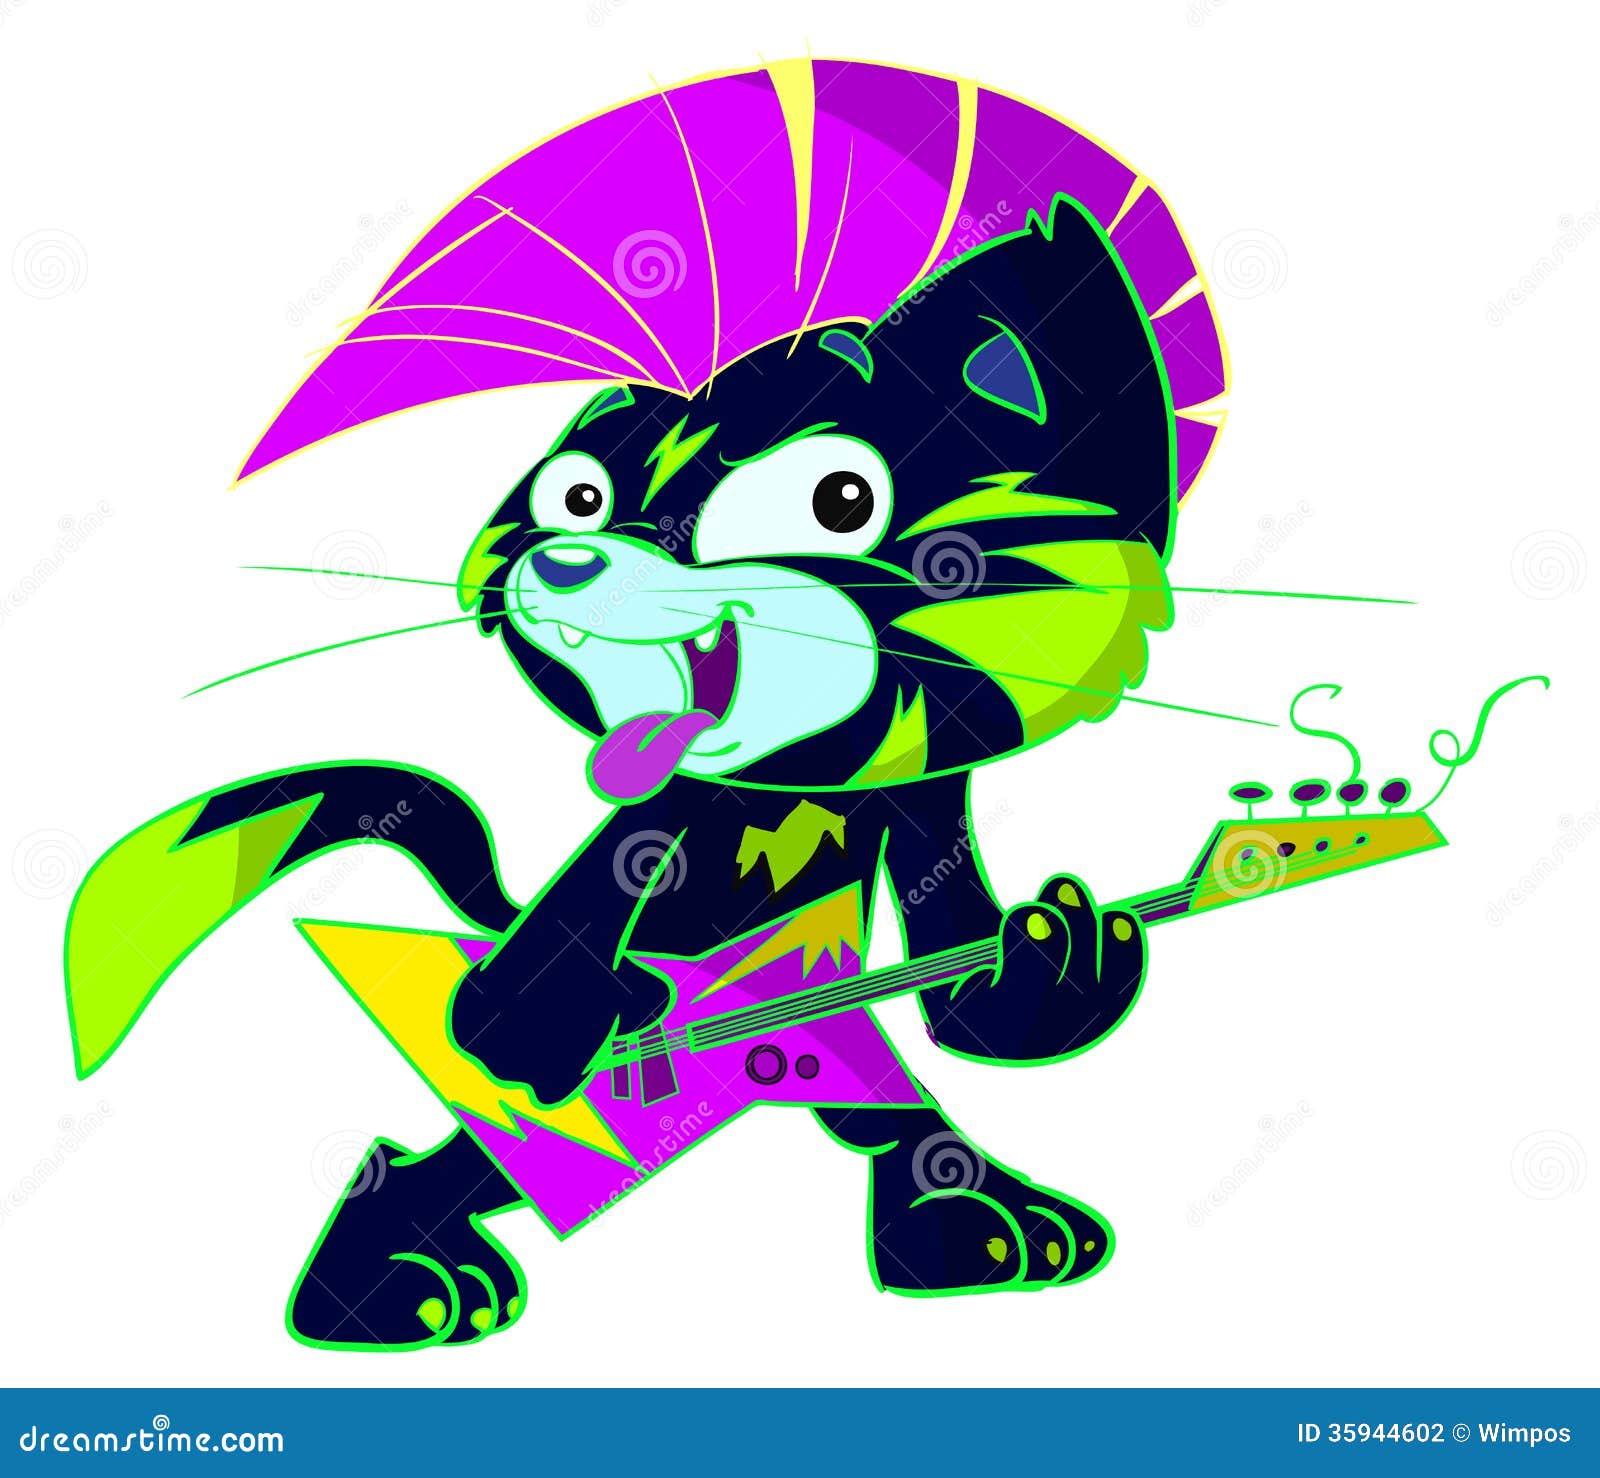 punk rock cat playing electric guitar